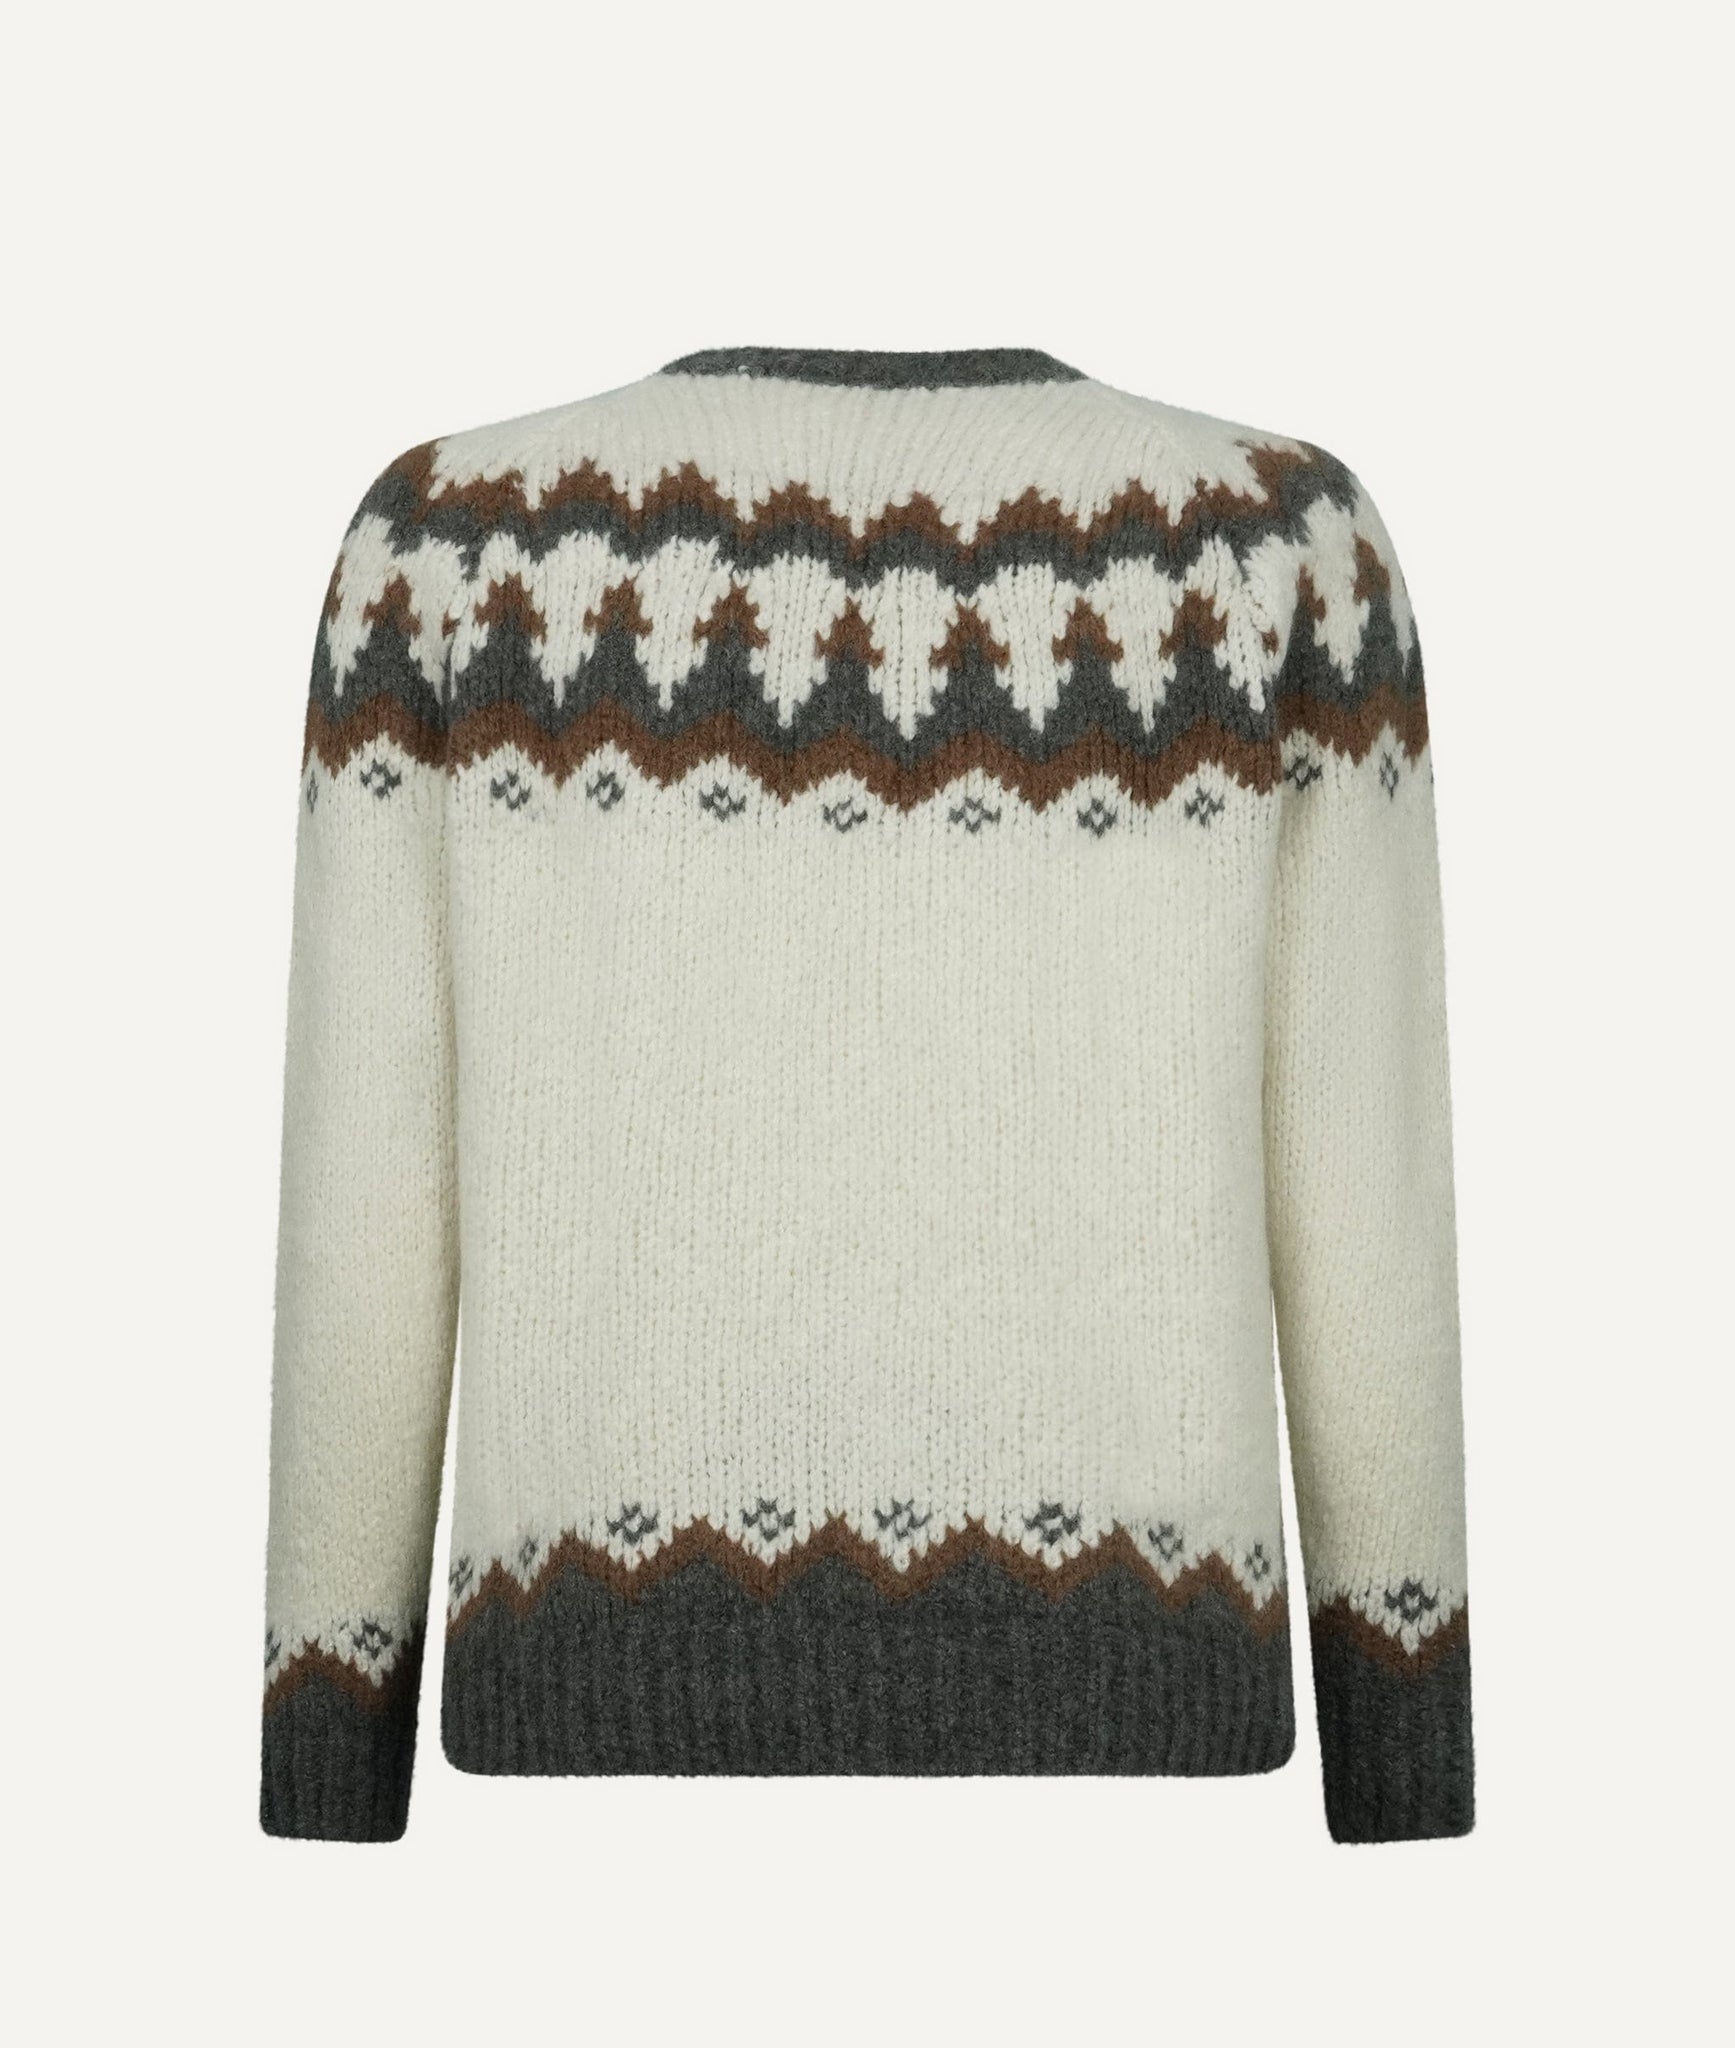 Eleventy - Sweater in Cashmere, Alpaca & Silk